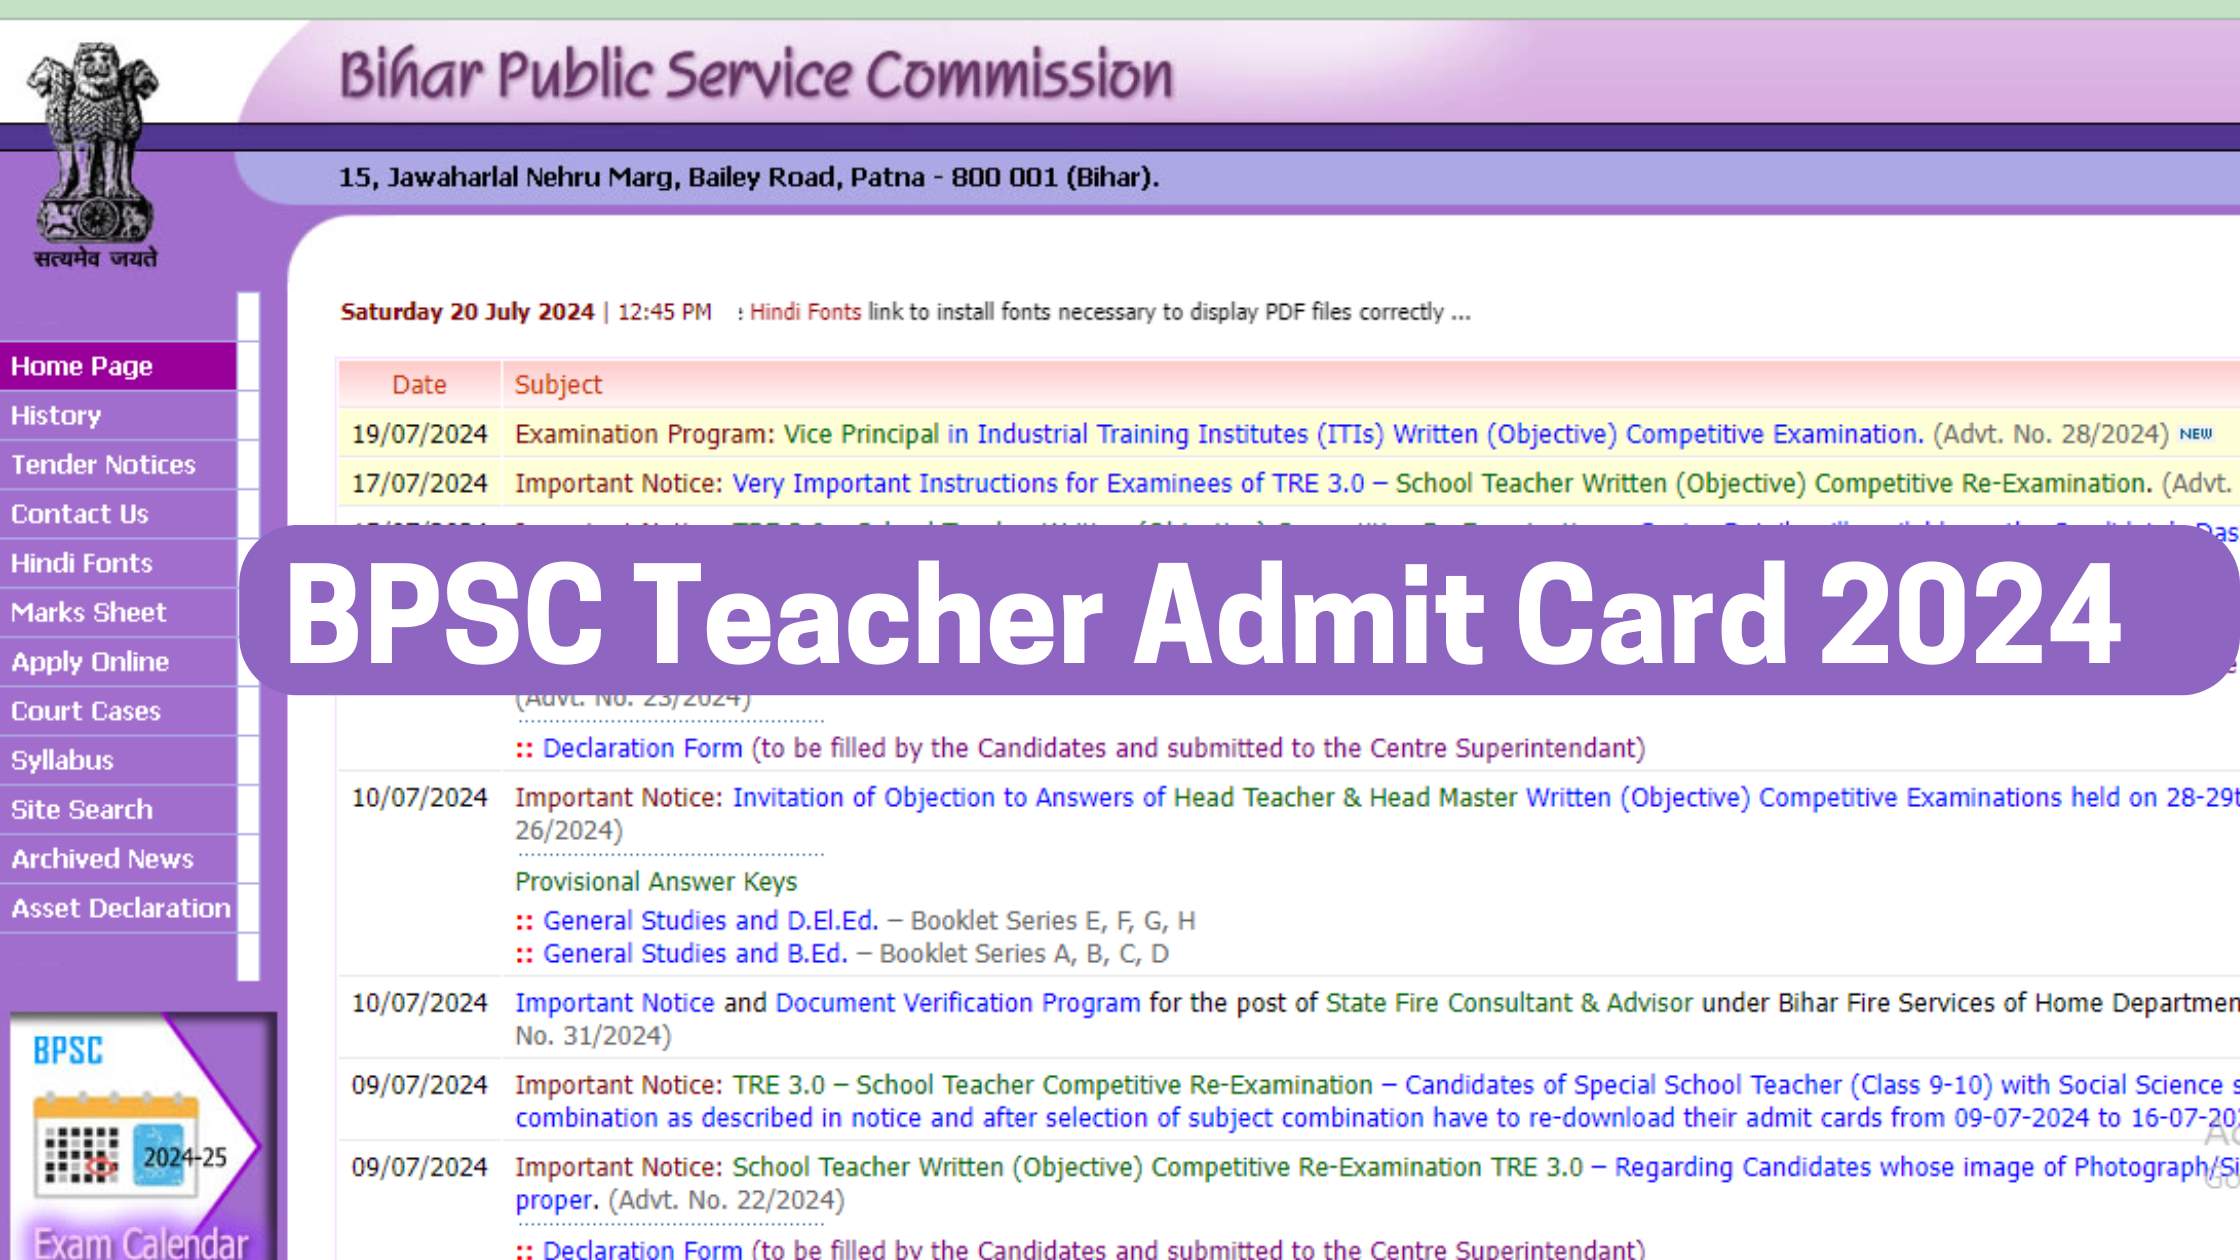 BPSC Teacher Admit Card 2024